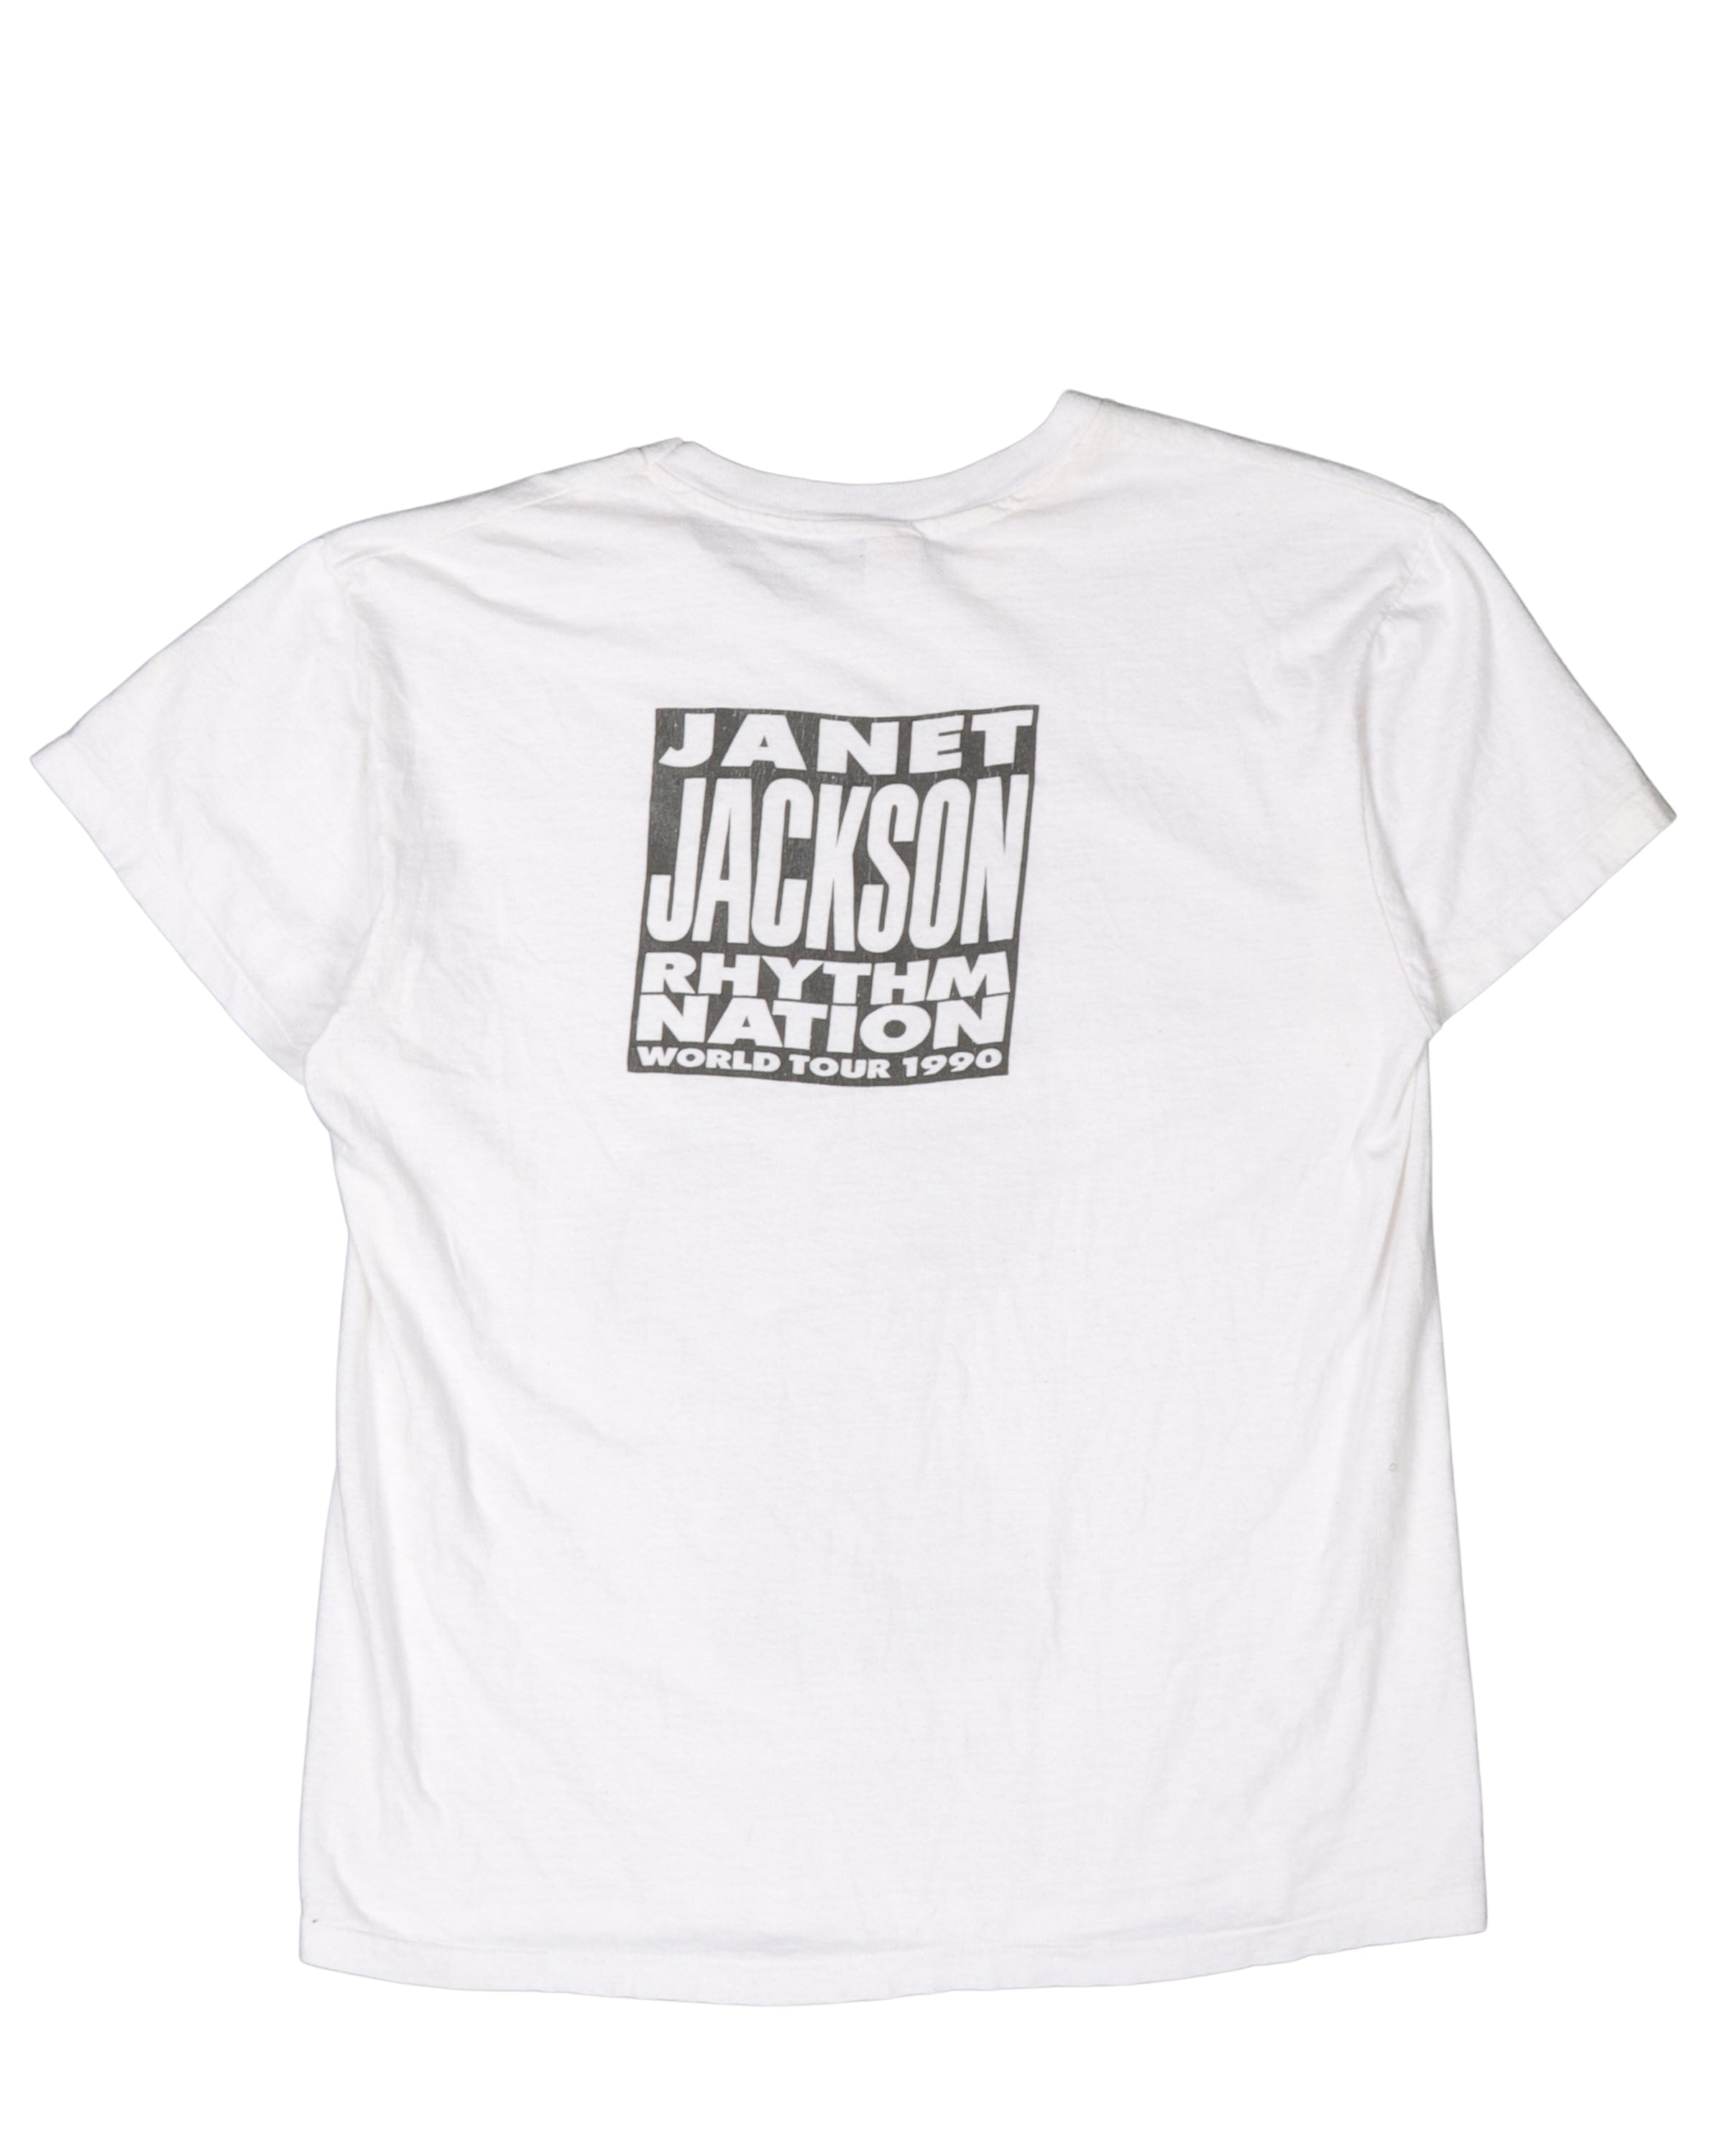 Vintage Janet Jackson Rhythm Nation World Tour 1990 T-Shirt